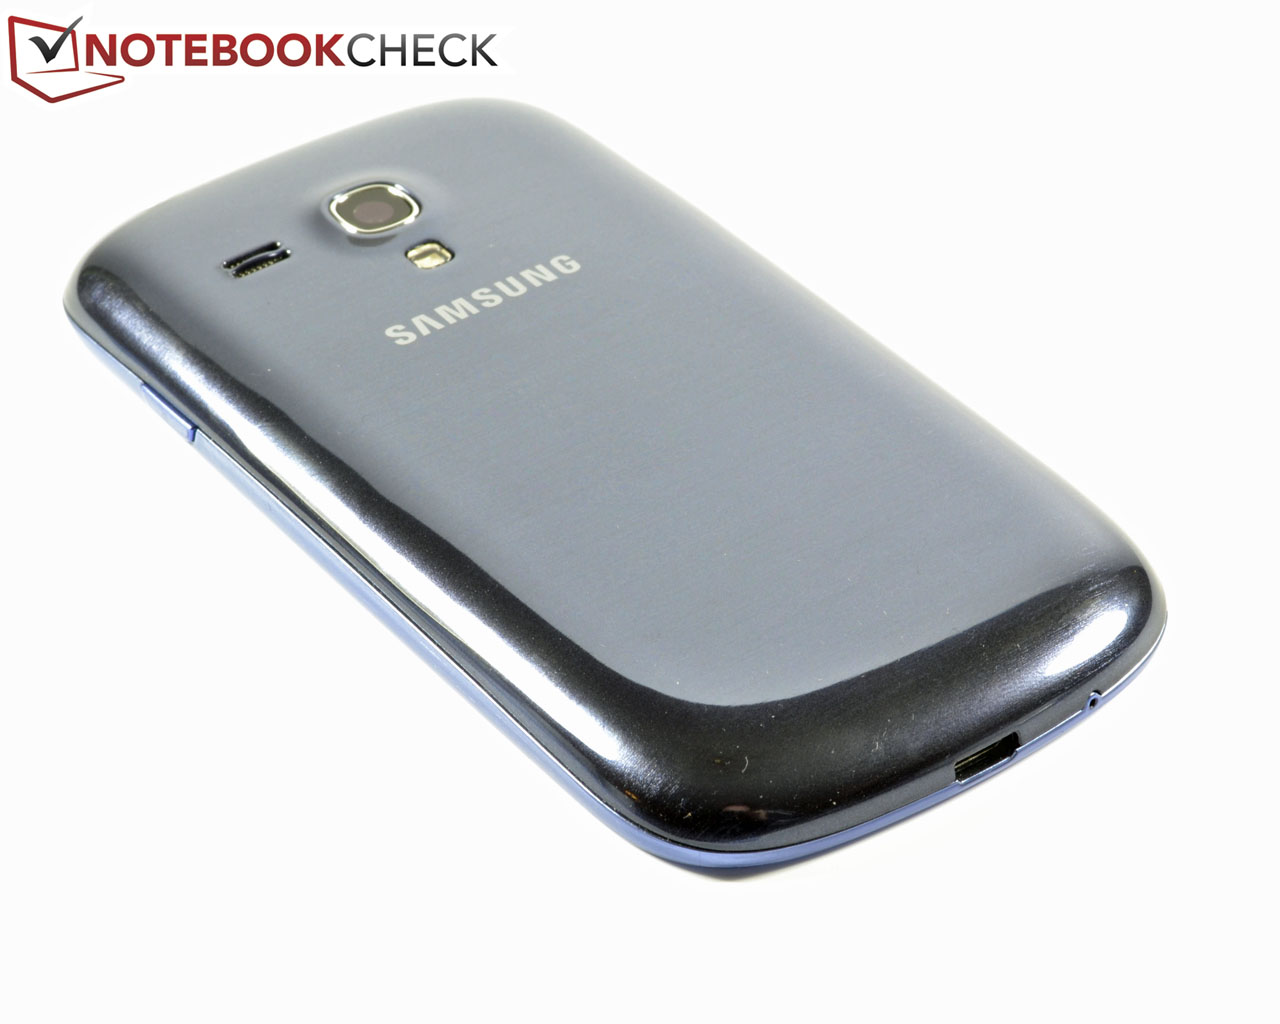 tolerantie Kreta sjaal Review Samsung S3 Mini GT-I8190 Smartphone - NotebookCheck.net Reviews